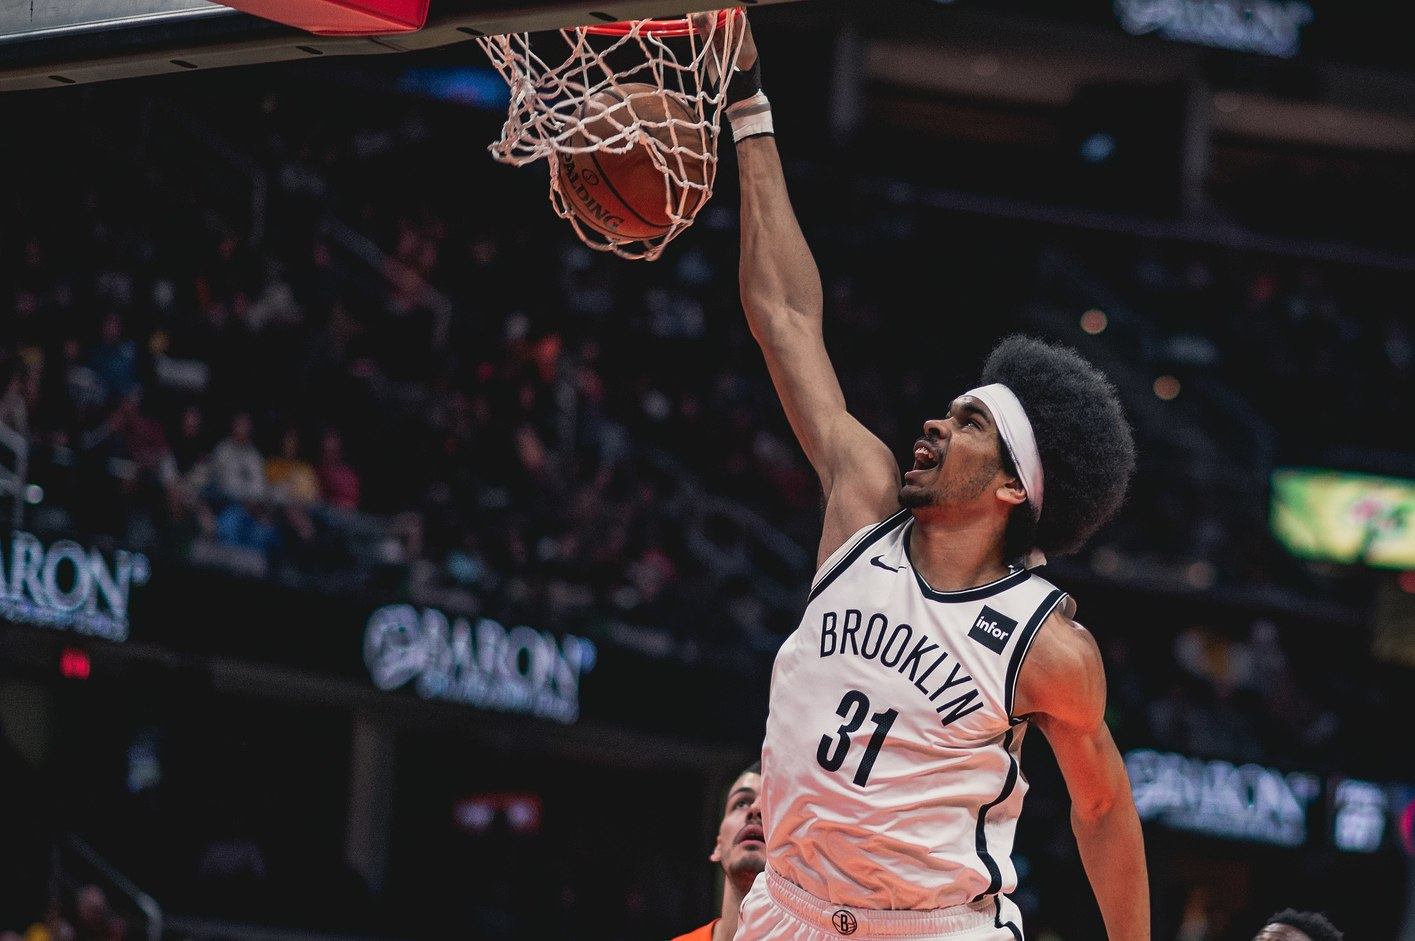 The Brooklyn Nets, NBA tickets in NYC